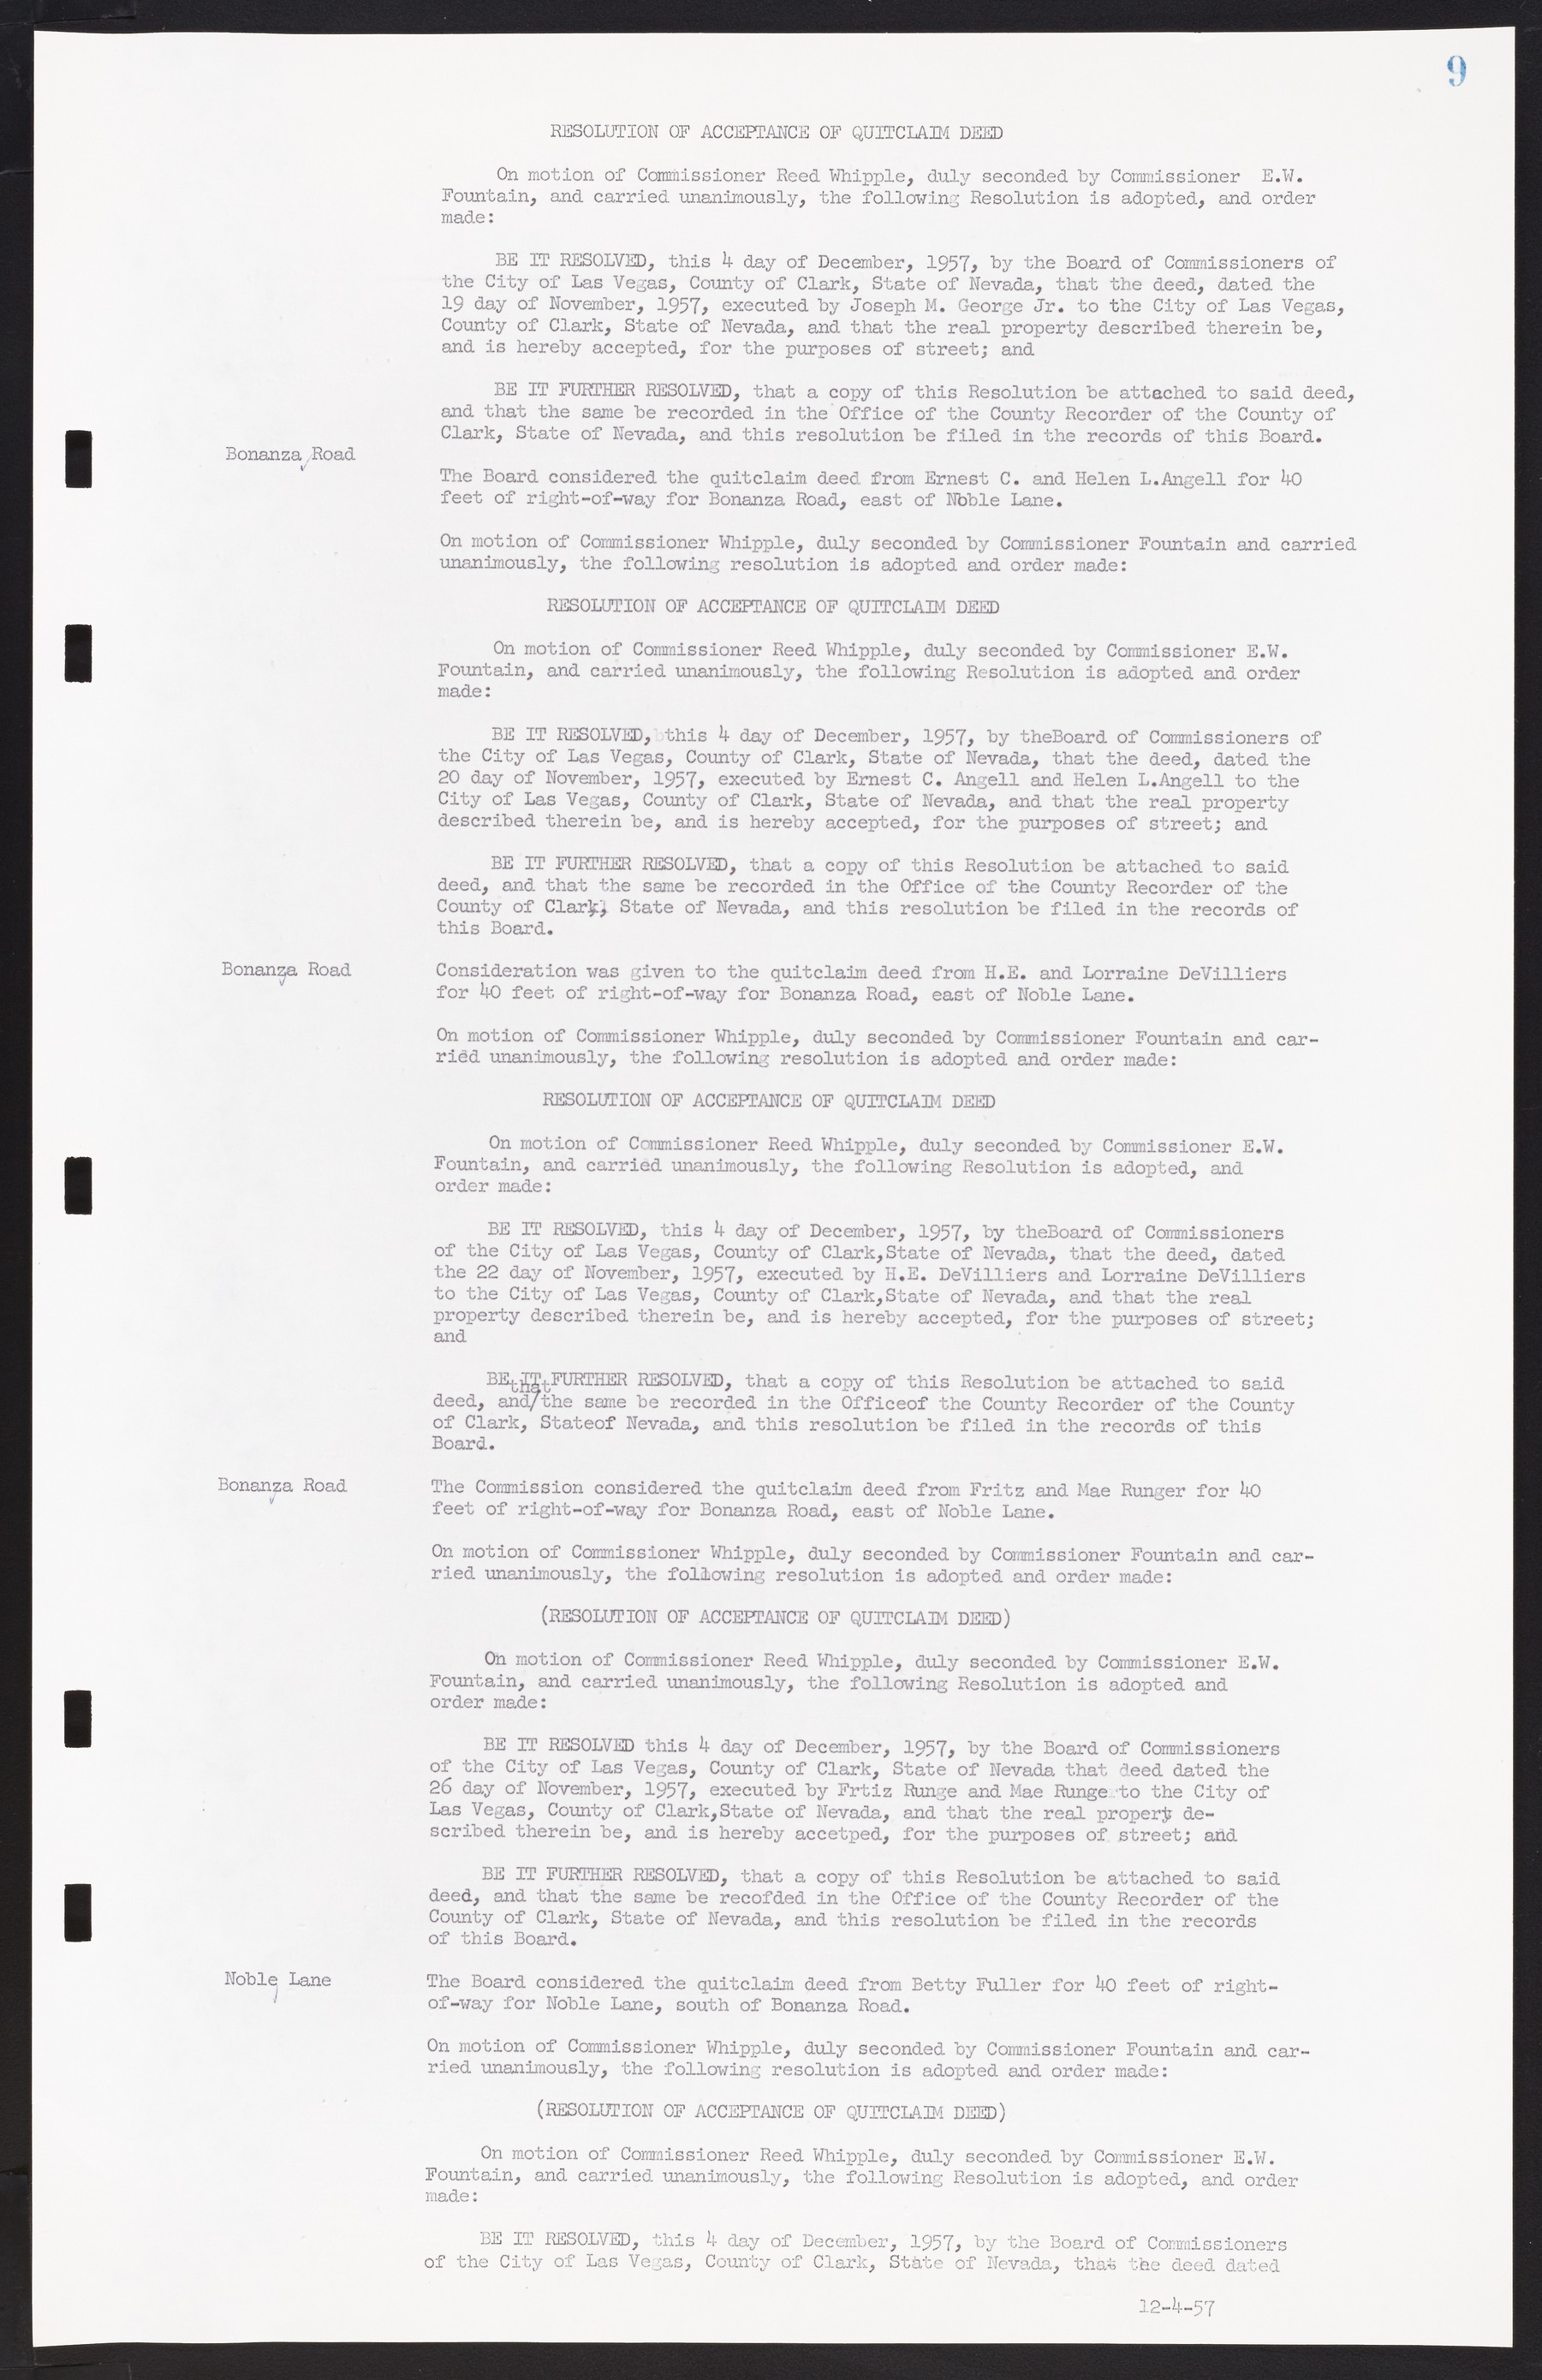 Las Vegas City Commission Minutes, November 20, 1957 to December 2, 1959, lvc000011-13